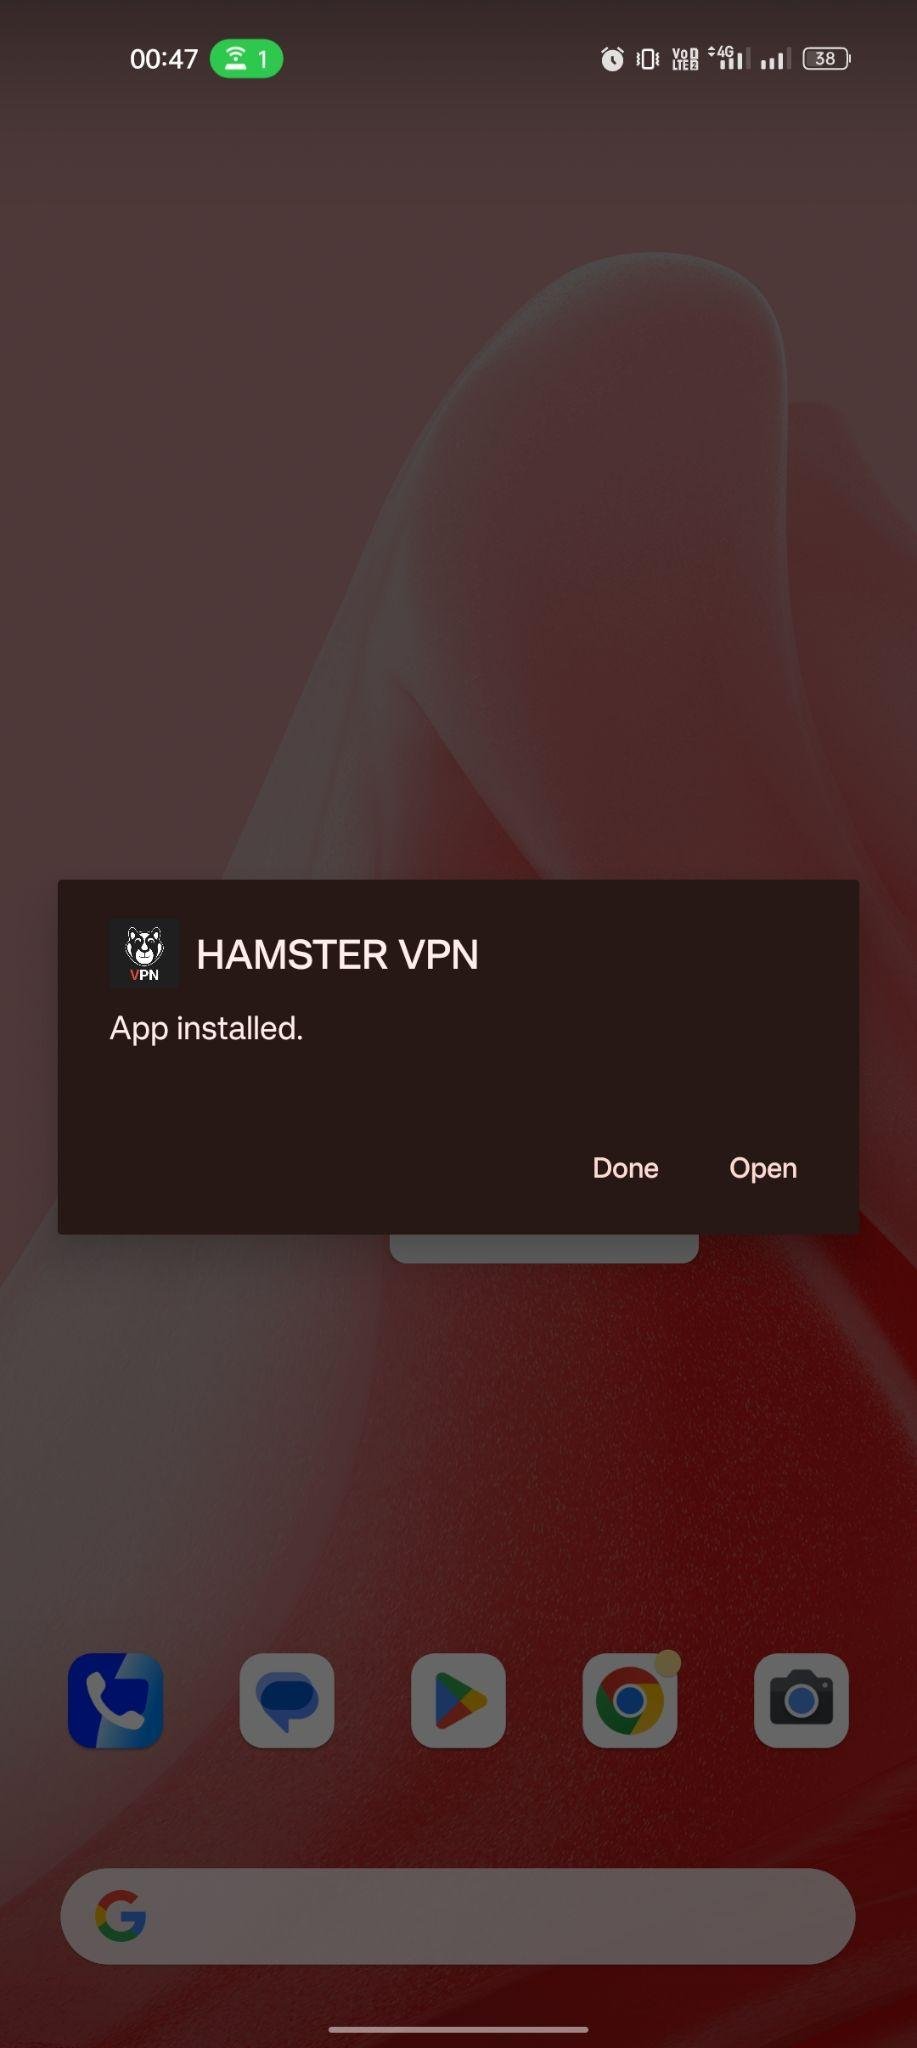 Hamster VPN apk installed